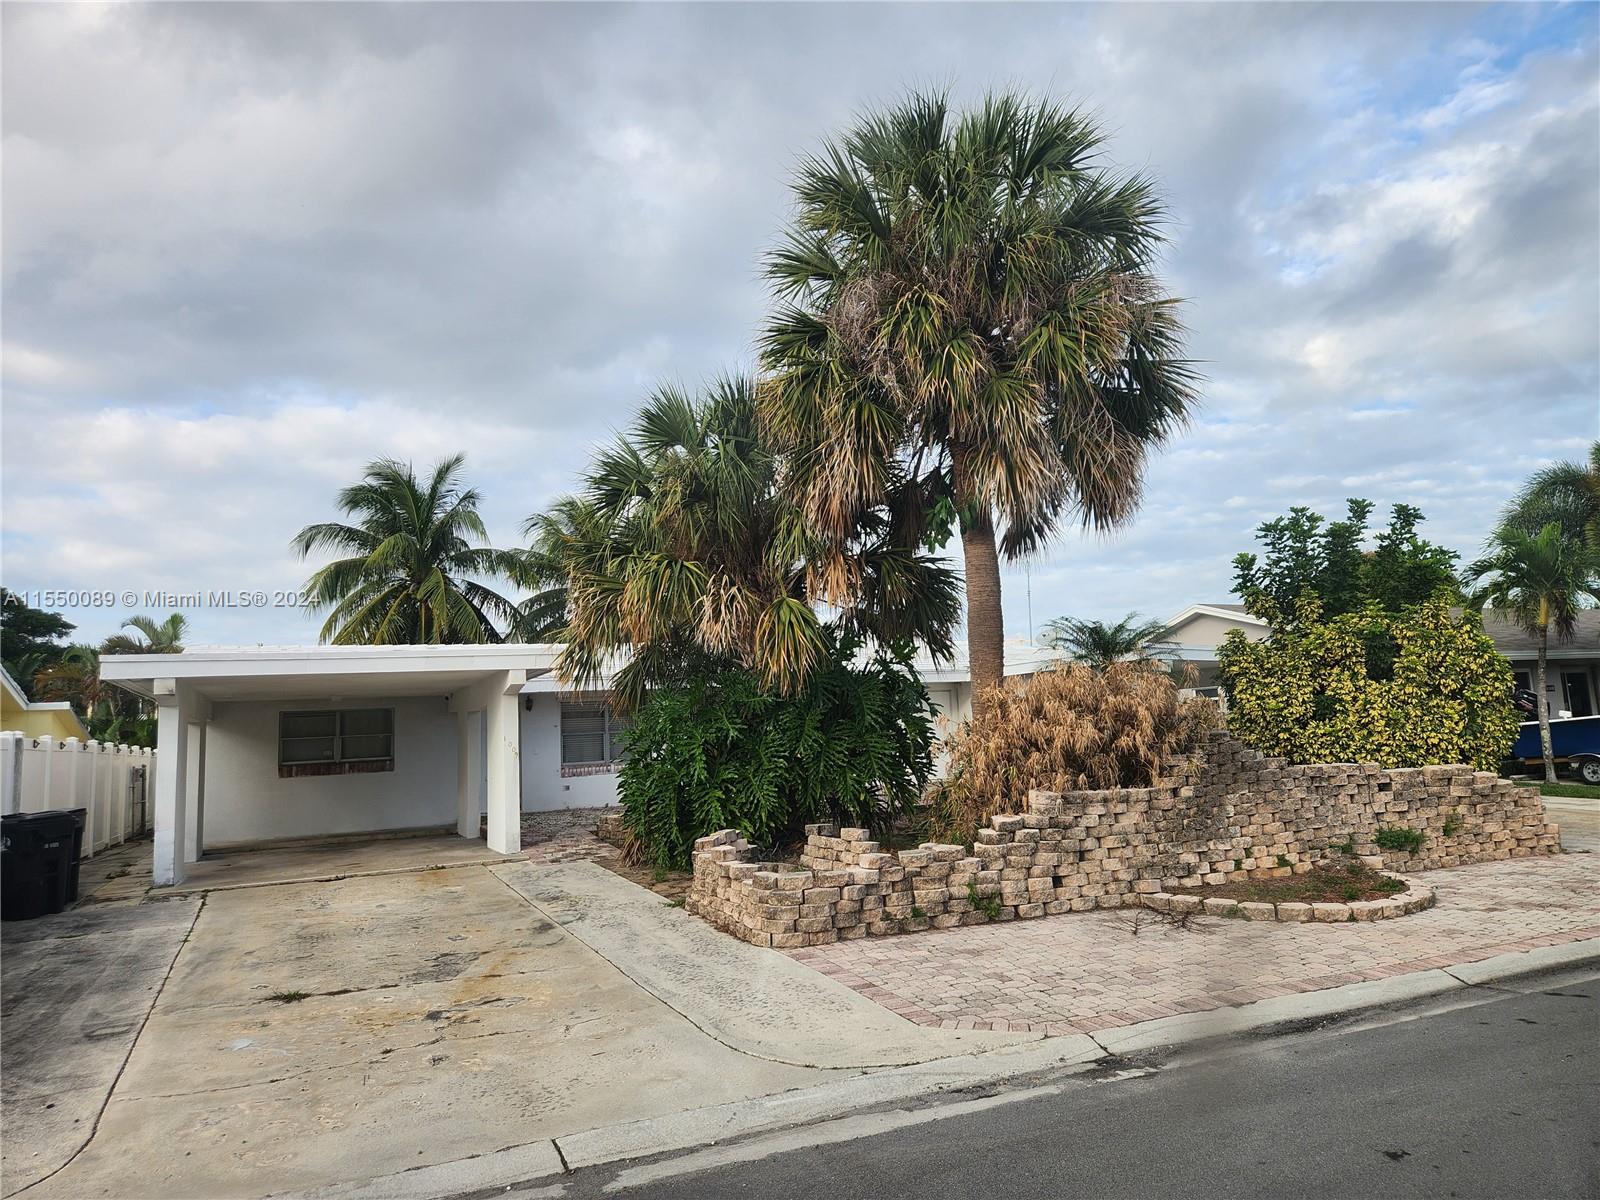 Rental Property at 10071009 Citrus Isle, Fort Lauderdale, Broward County, Florida -  - $1,200,000 MO.